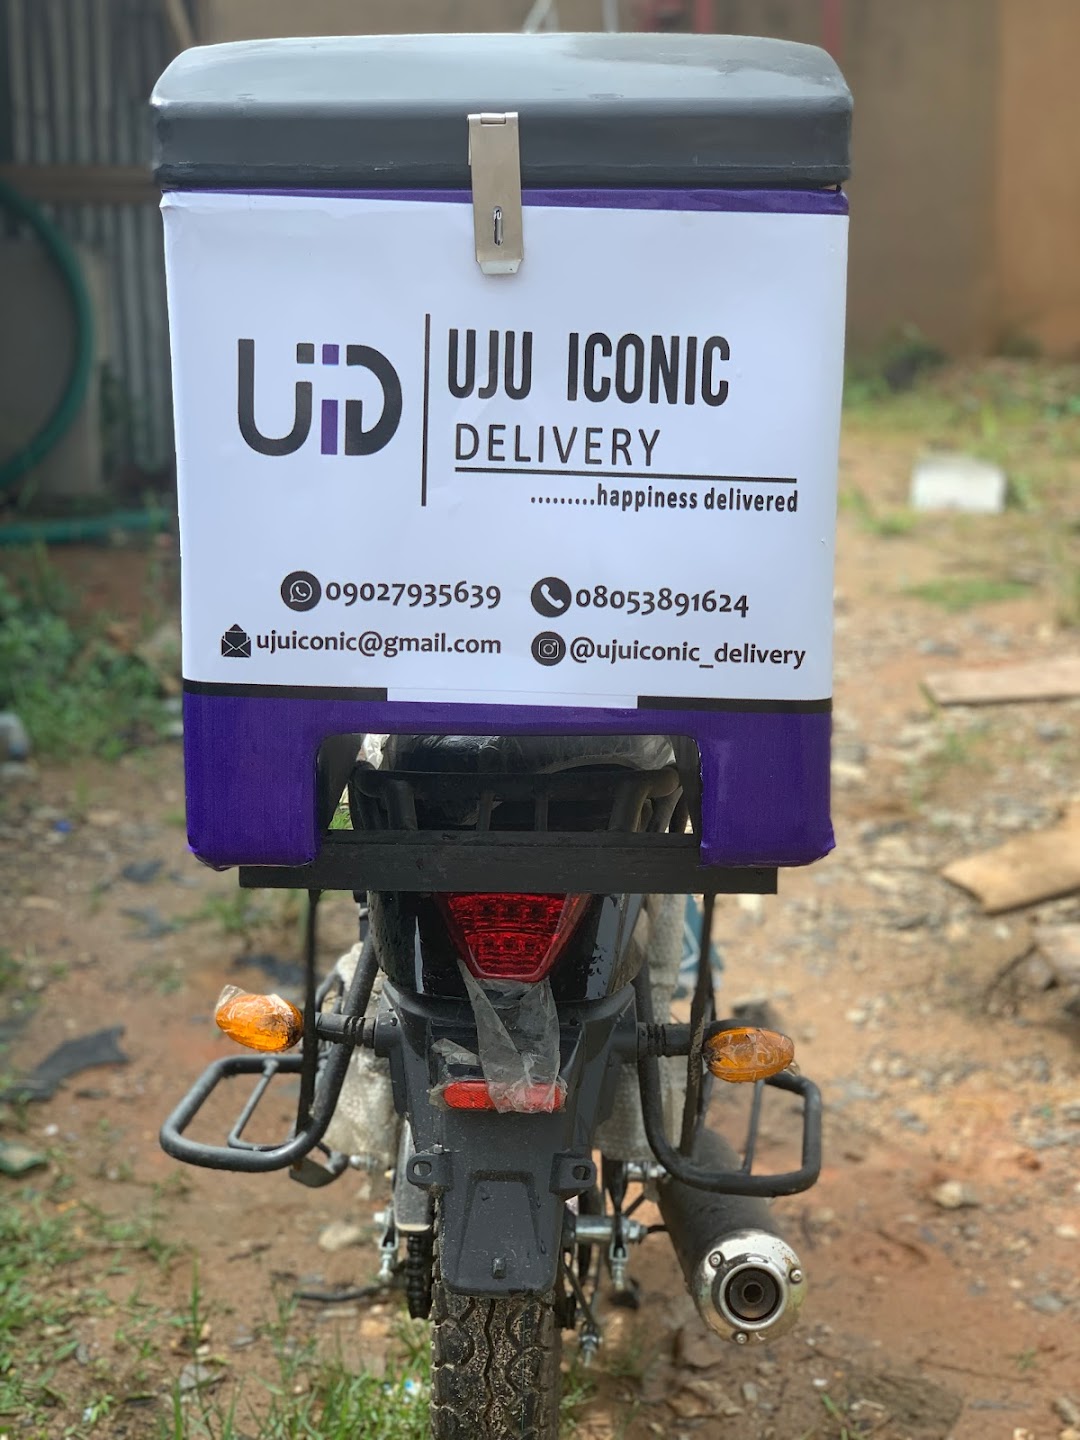 Uju Iconic Delivery